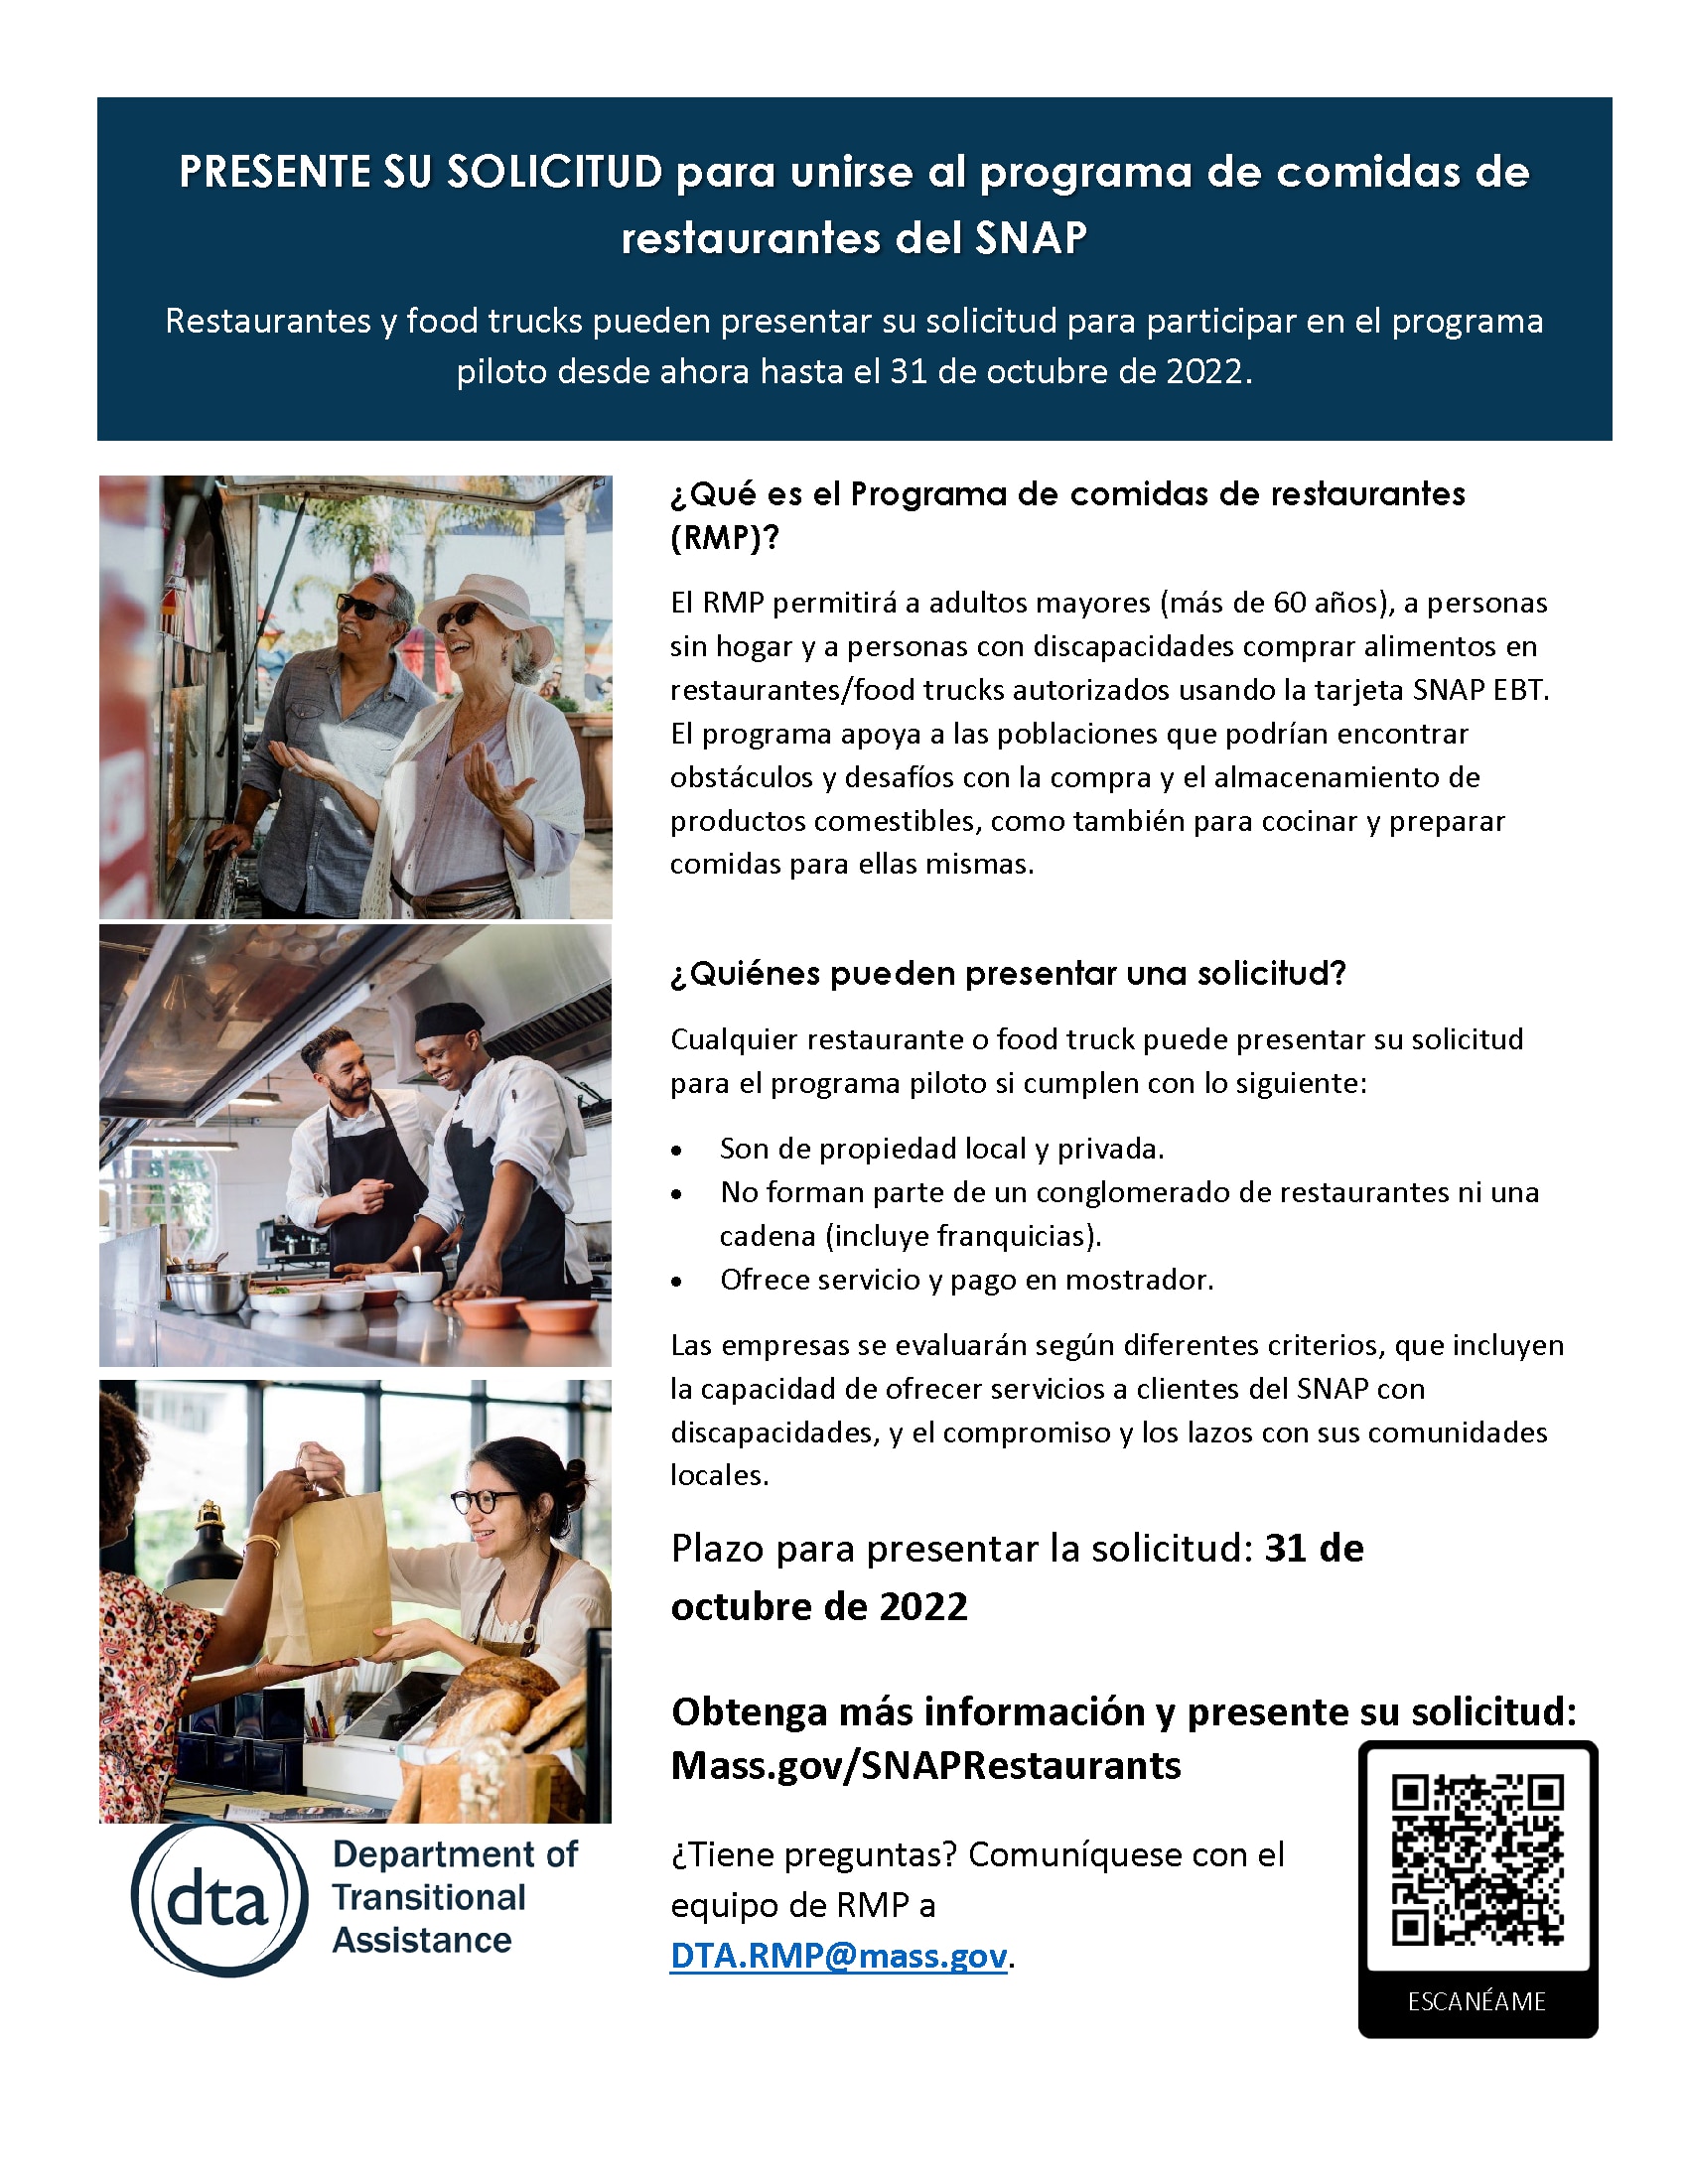 SNAP Restaurant Meals Program (RMP) Flyer for Vendors - Spanish